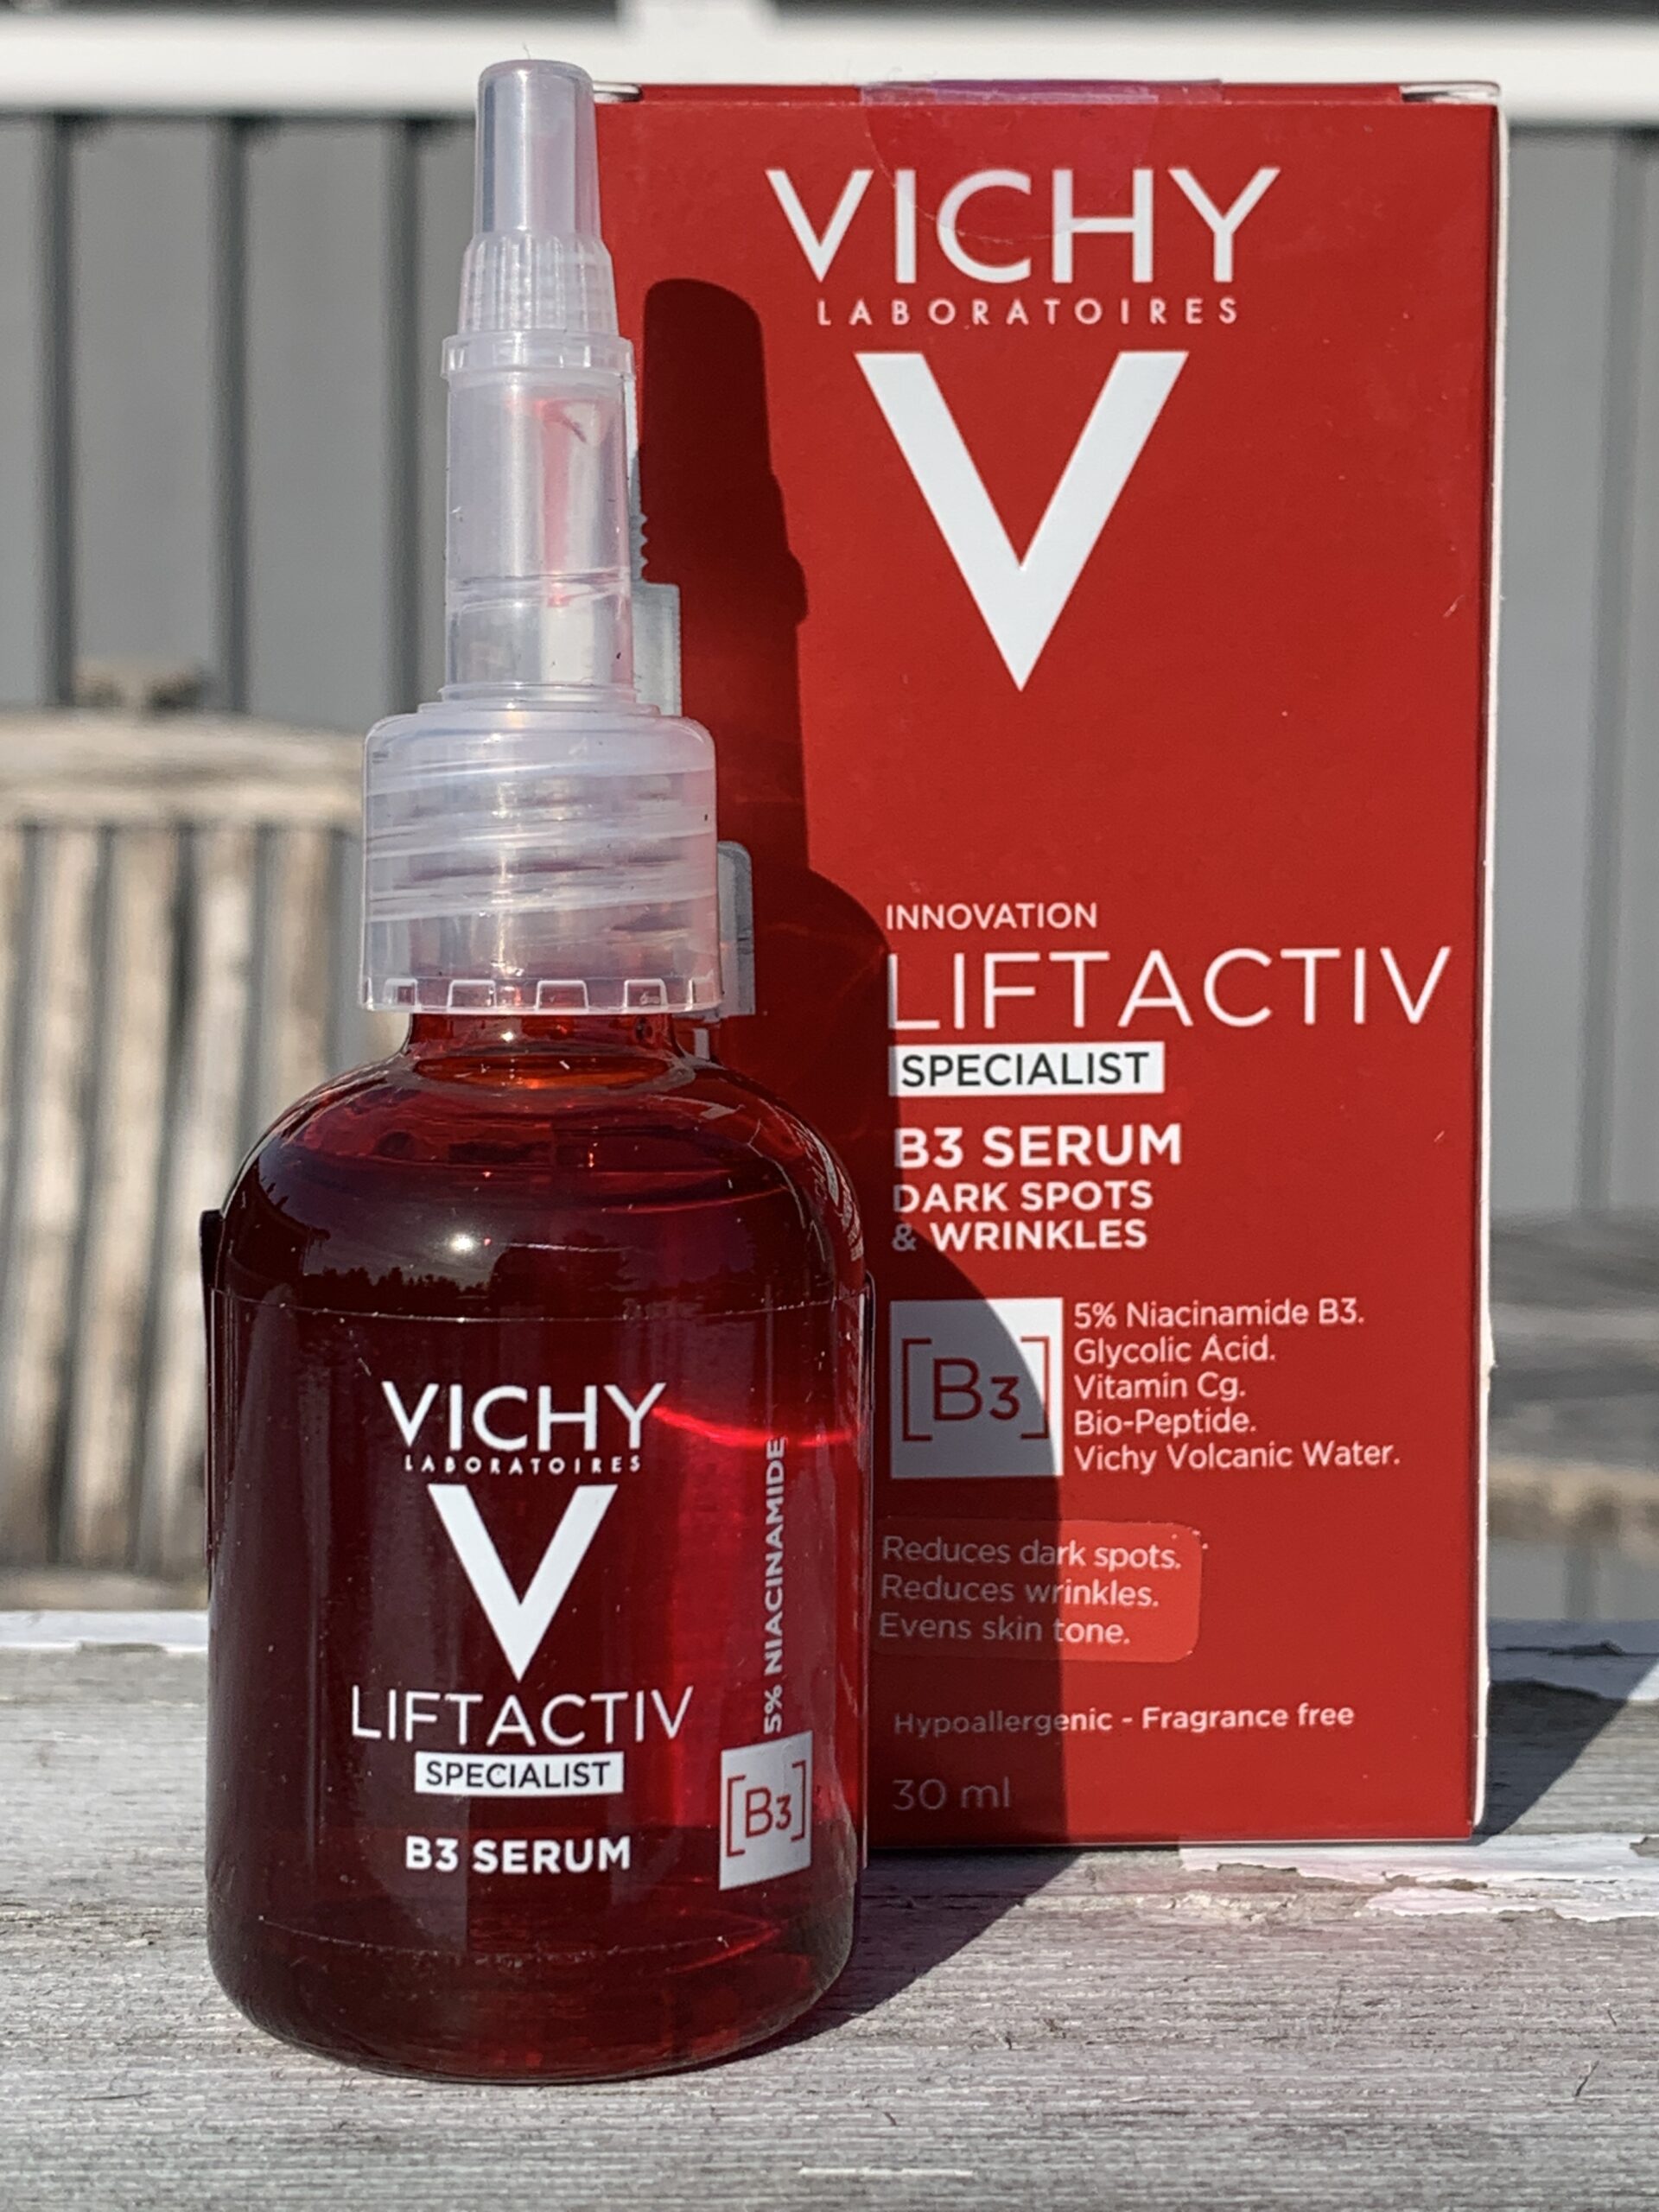 Vichy Liftactiv specialist b3 serum